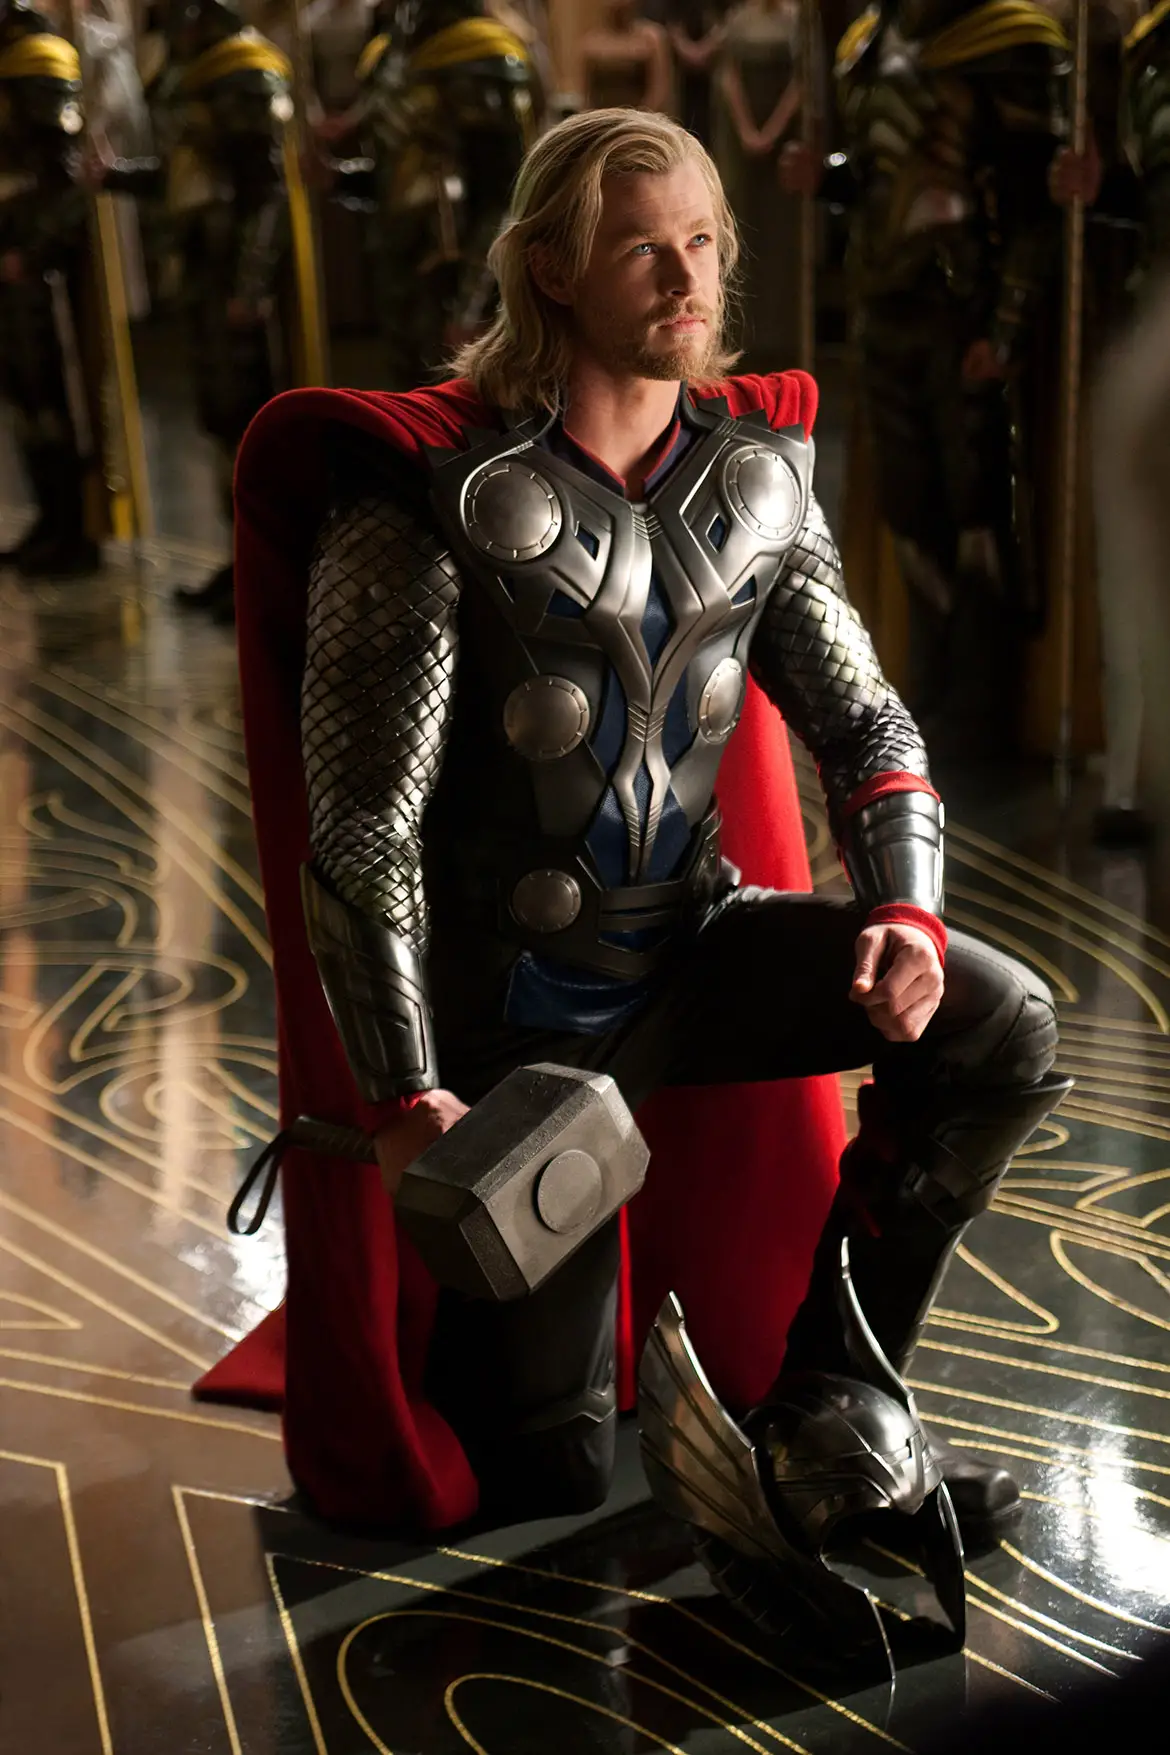 Thor kneeling